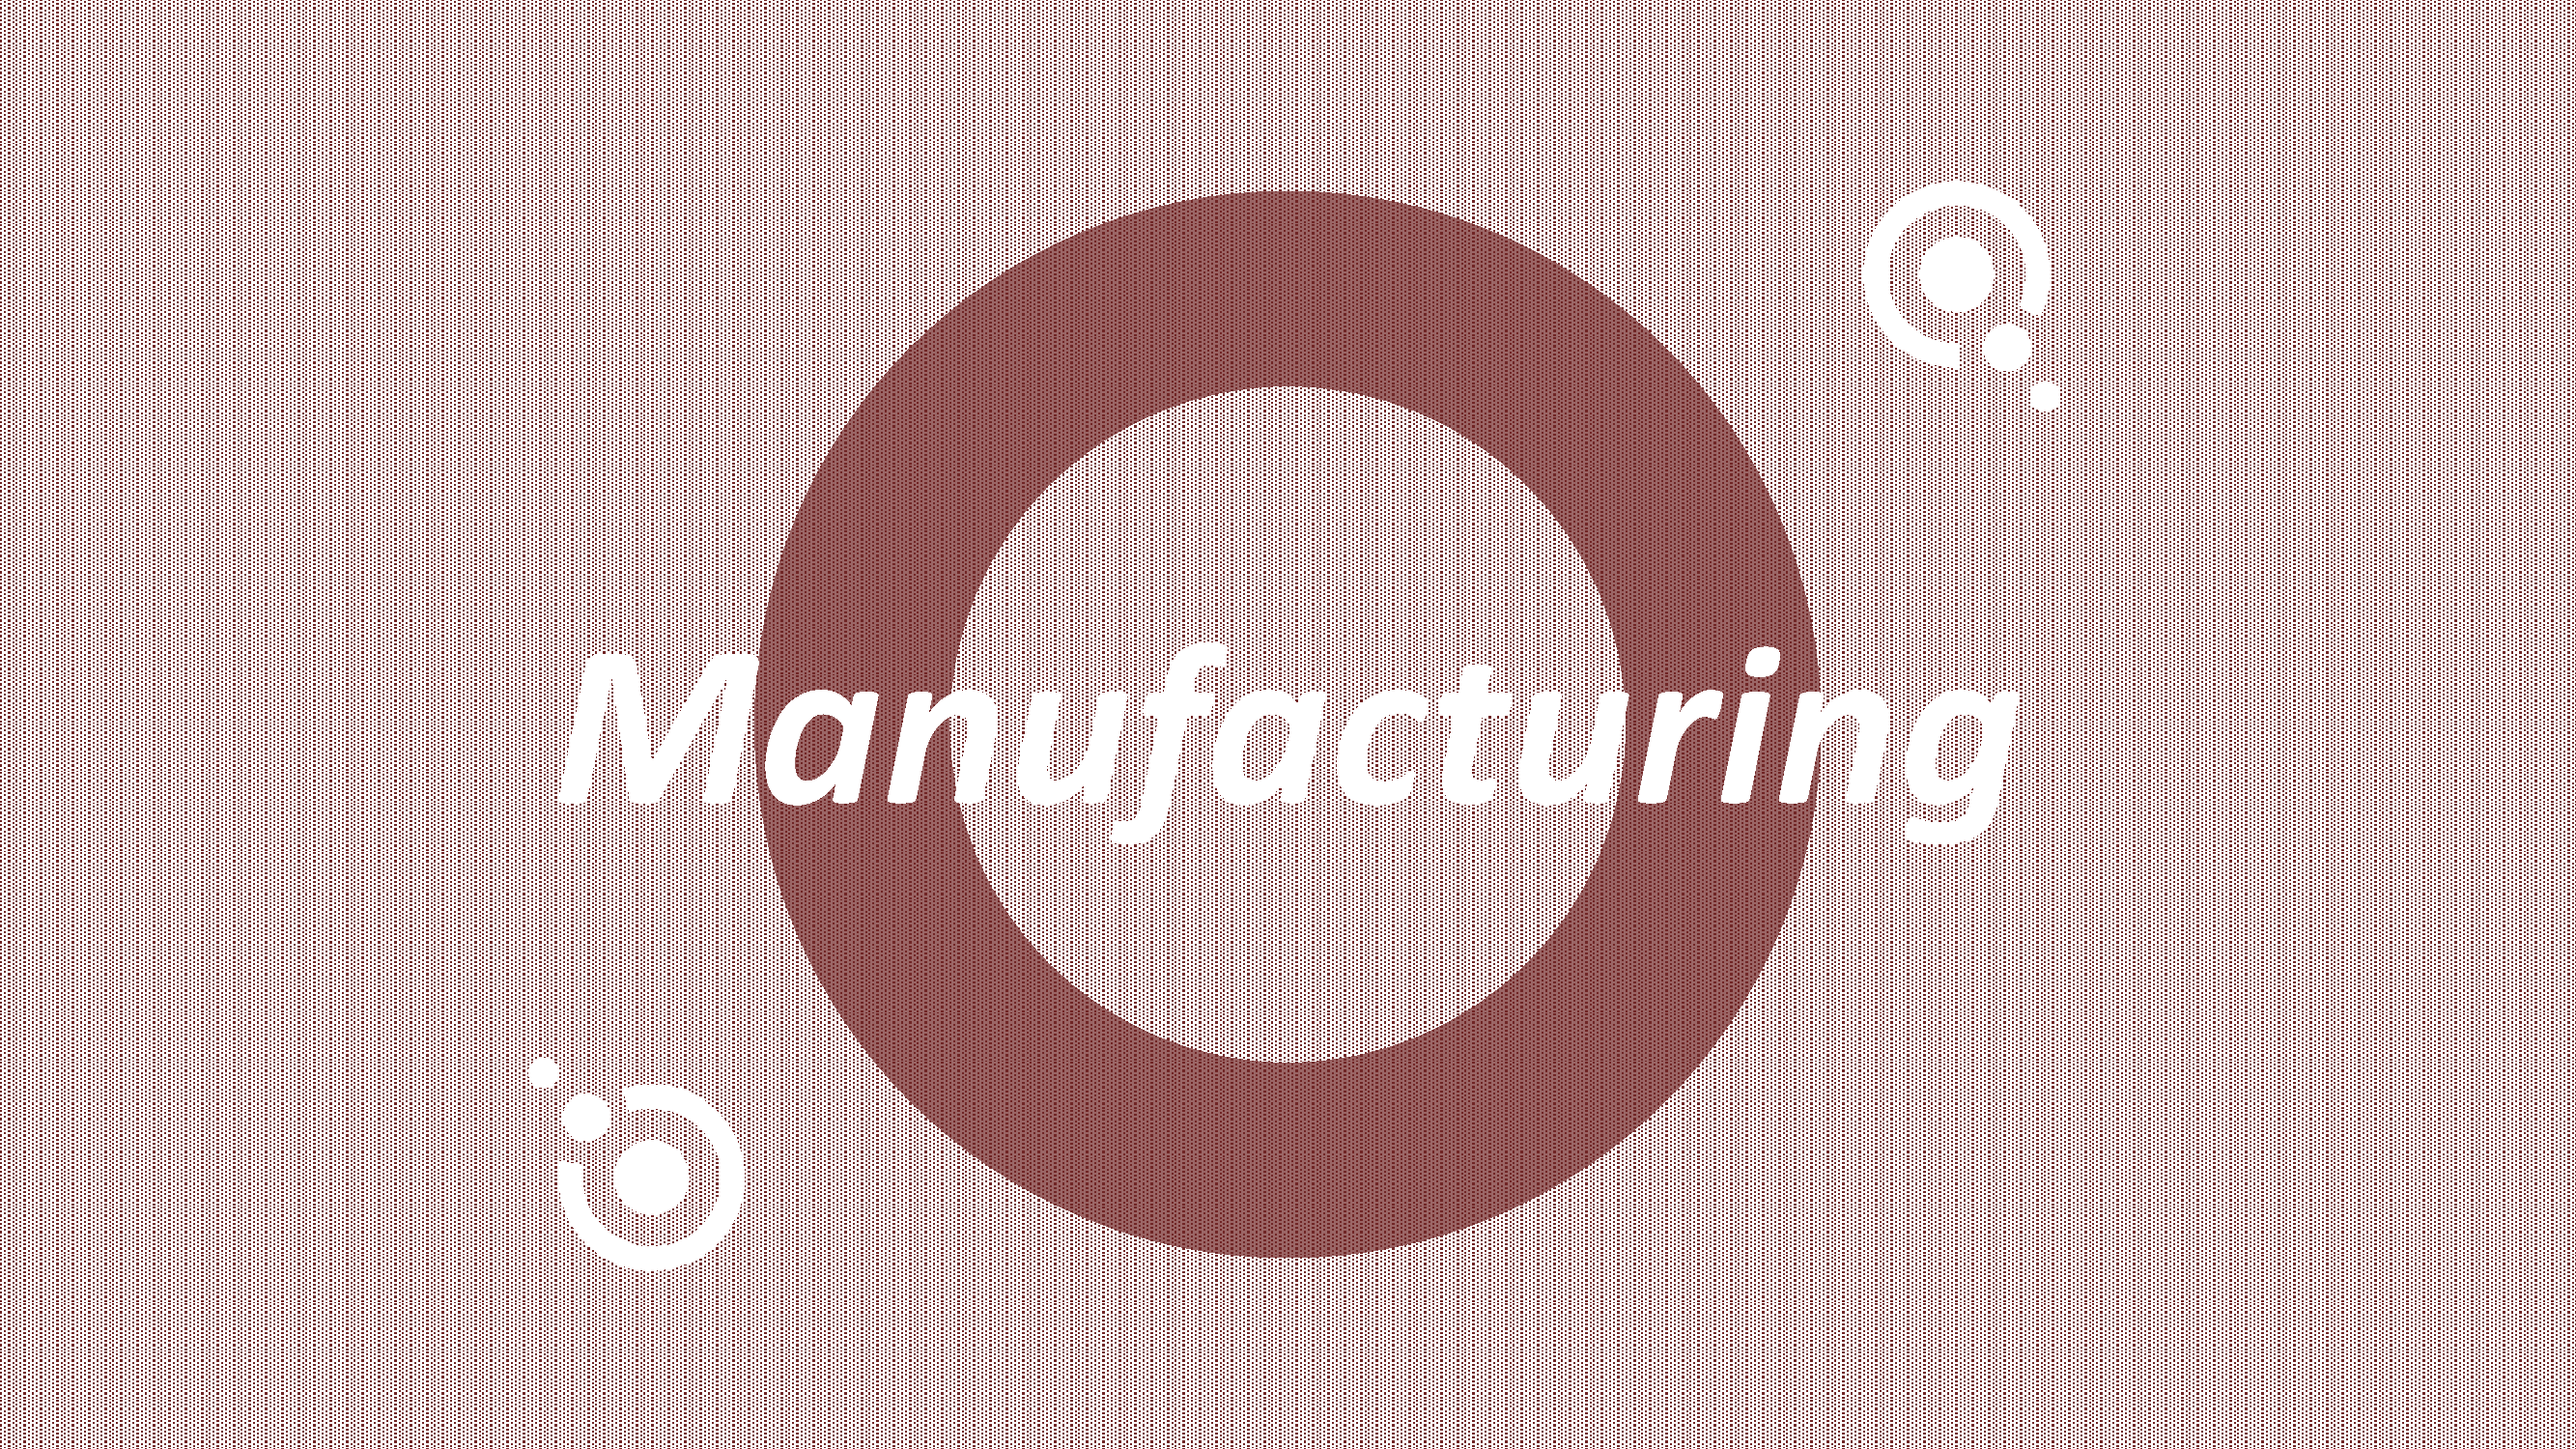 Manufacturing (9)